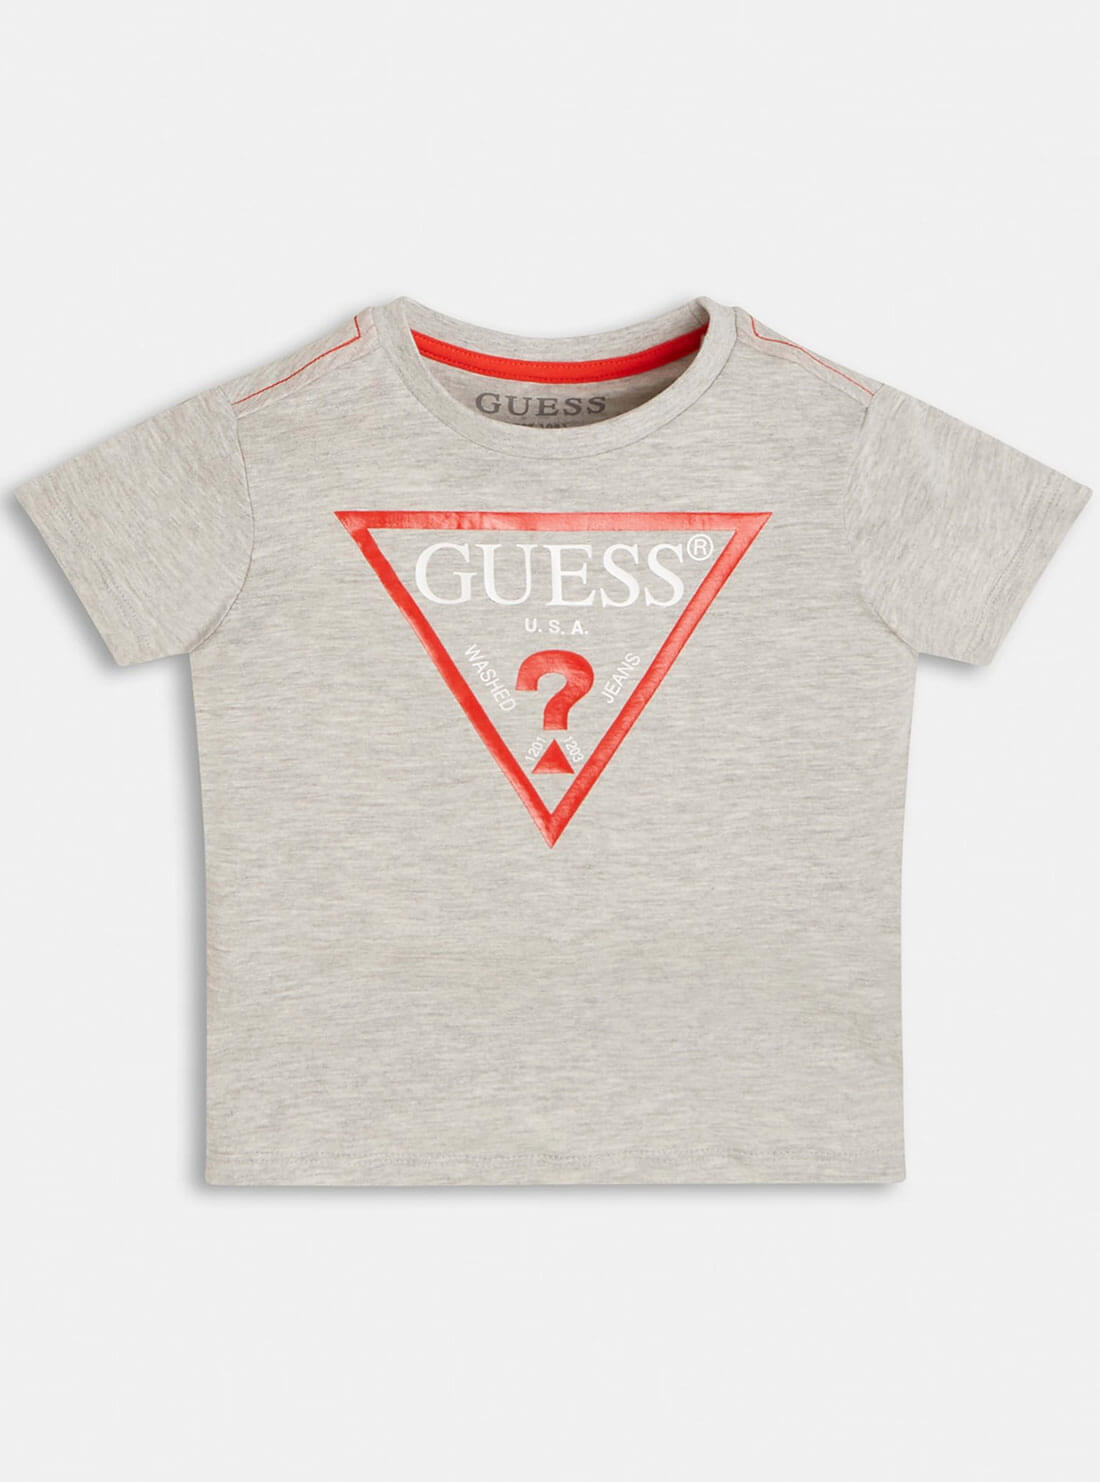 GUESS Little Boys Grey Logo Short Sleeve T-Shirt (2-7)  N73I55K8HM0 Front View